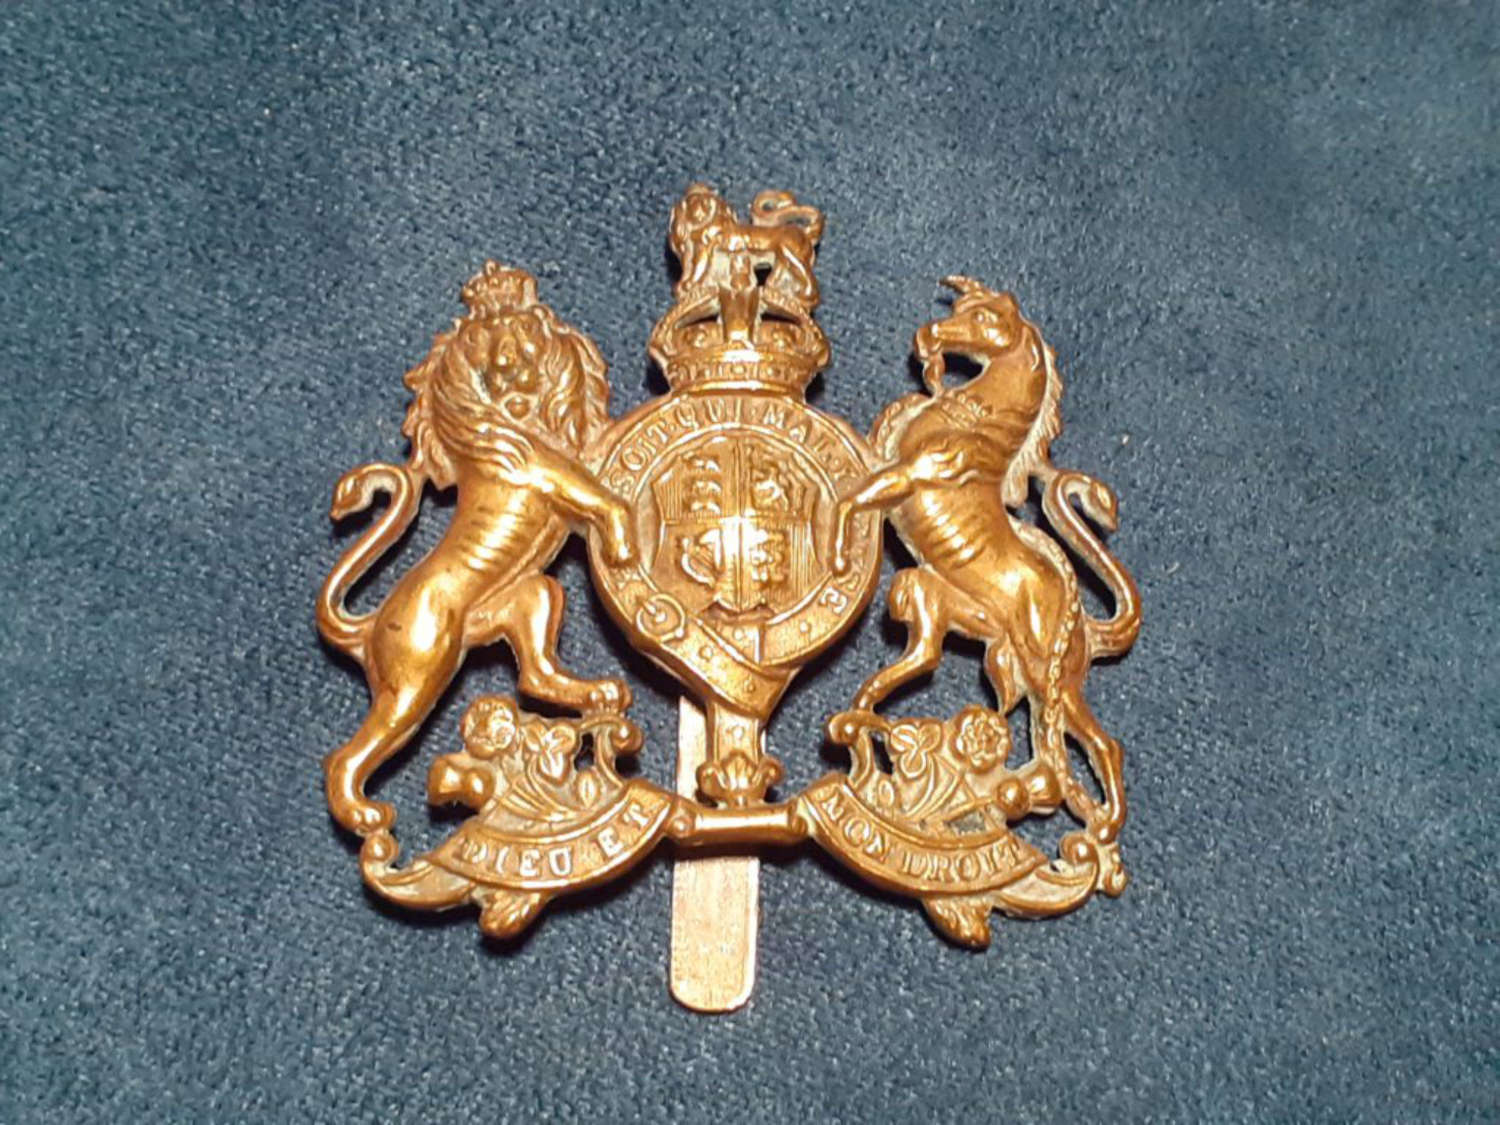 General Service Corps Cap Badge